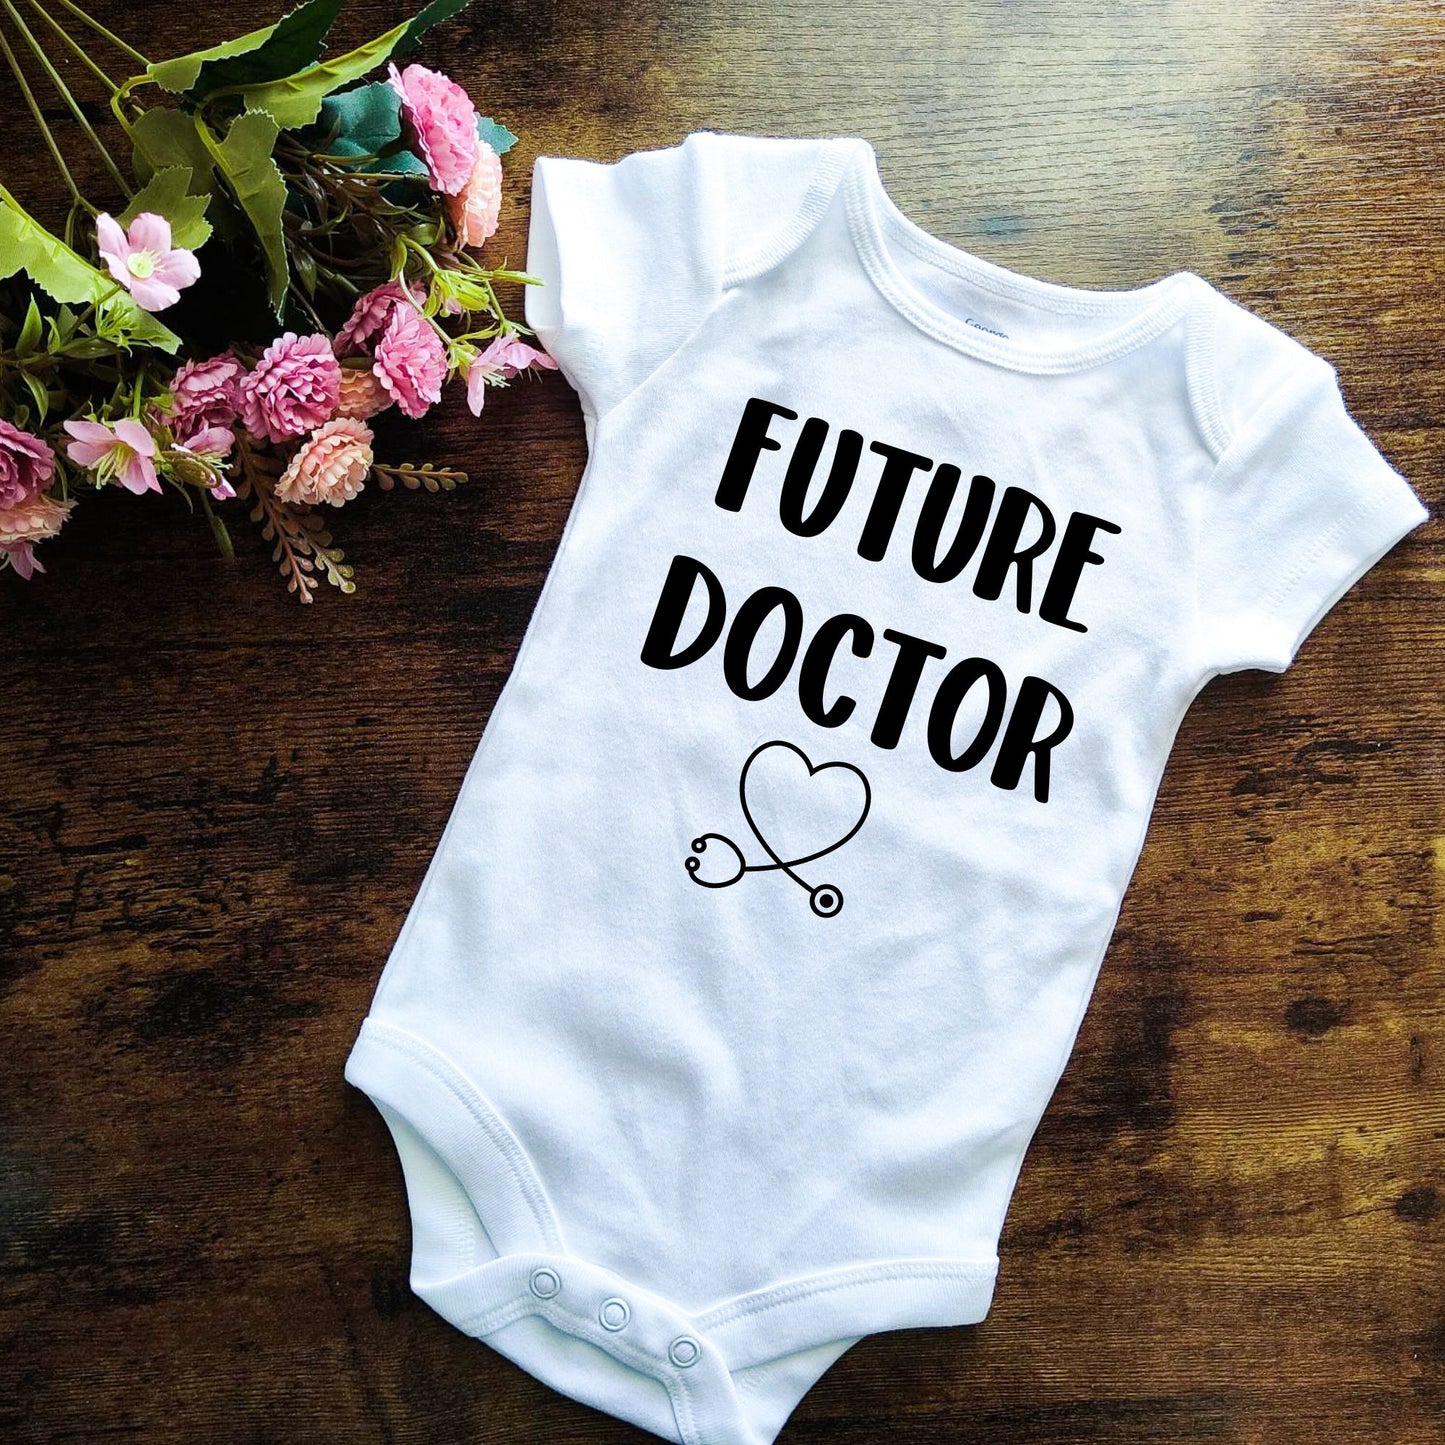 Future Doctor bodysuit